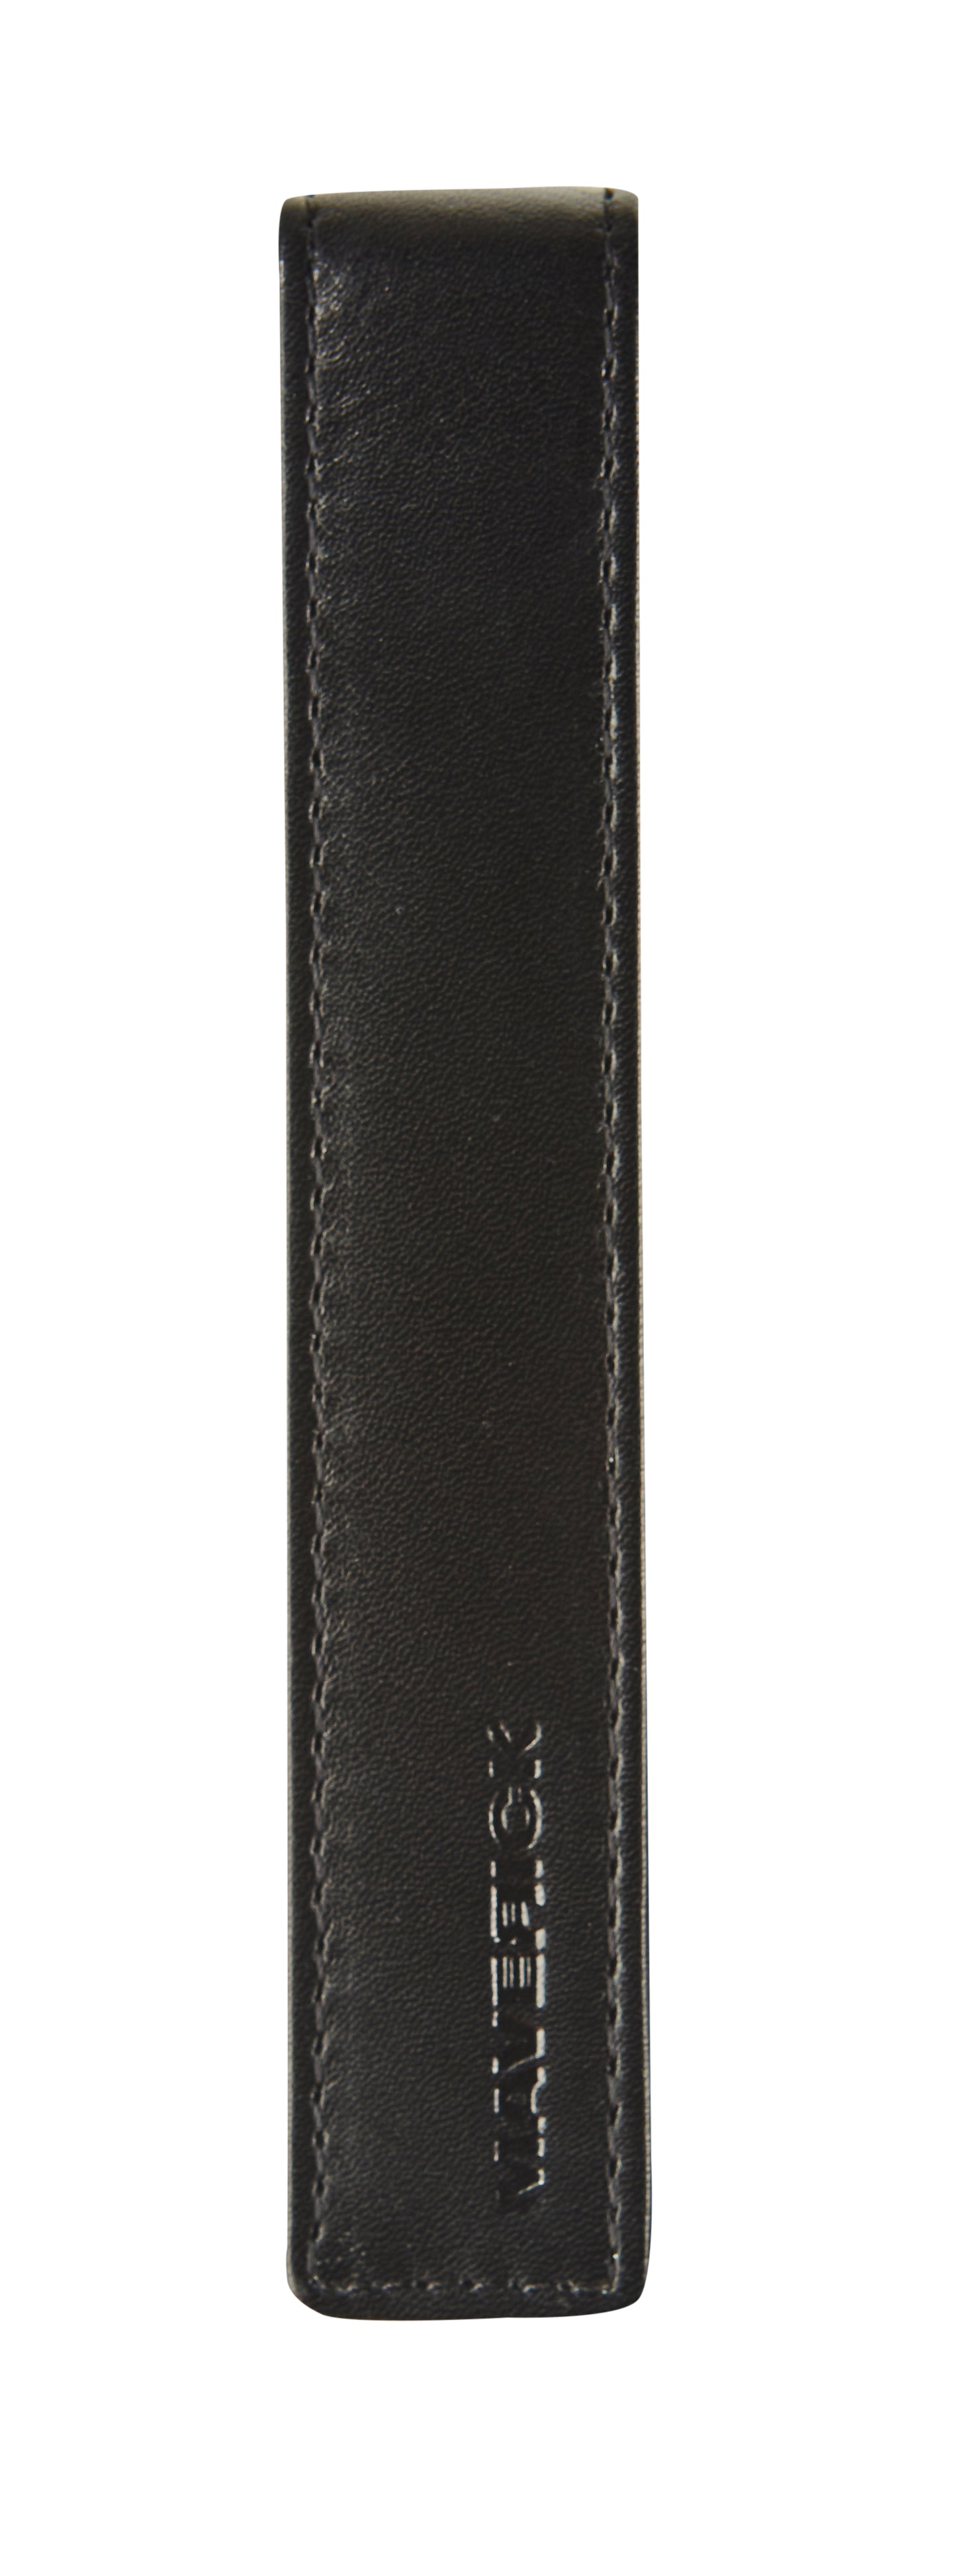 Maverick Stifte-Etui ALL BLACK für 1 Stift | Echtes Leder